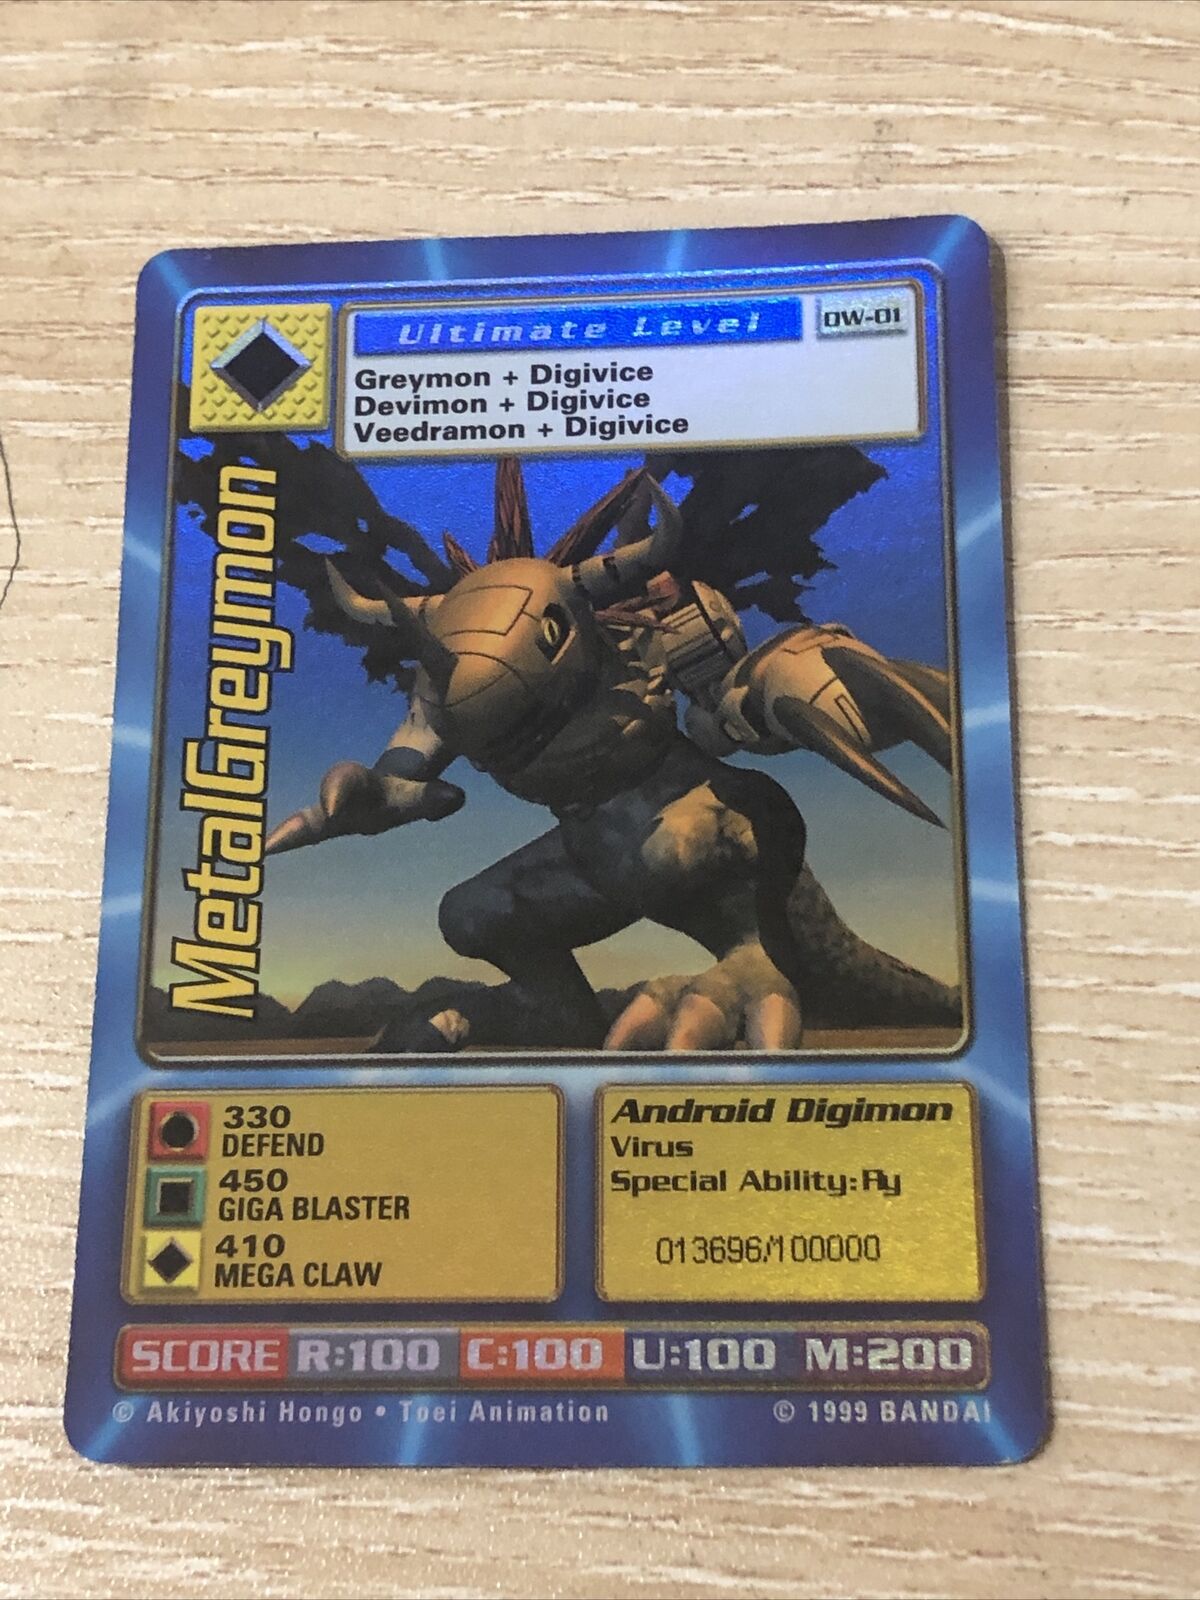 Digimon World PlayStation Promo DW-01 MetalGreymon - number 013696 / 100,000